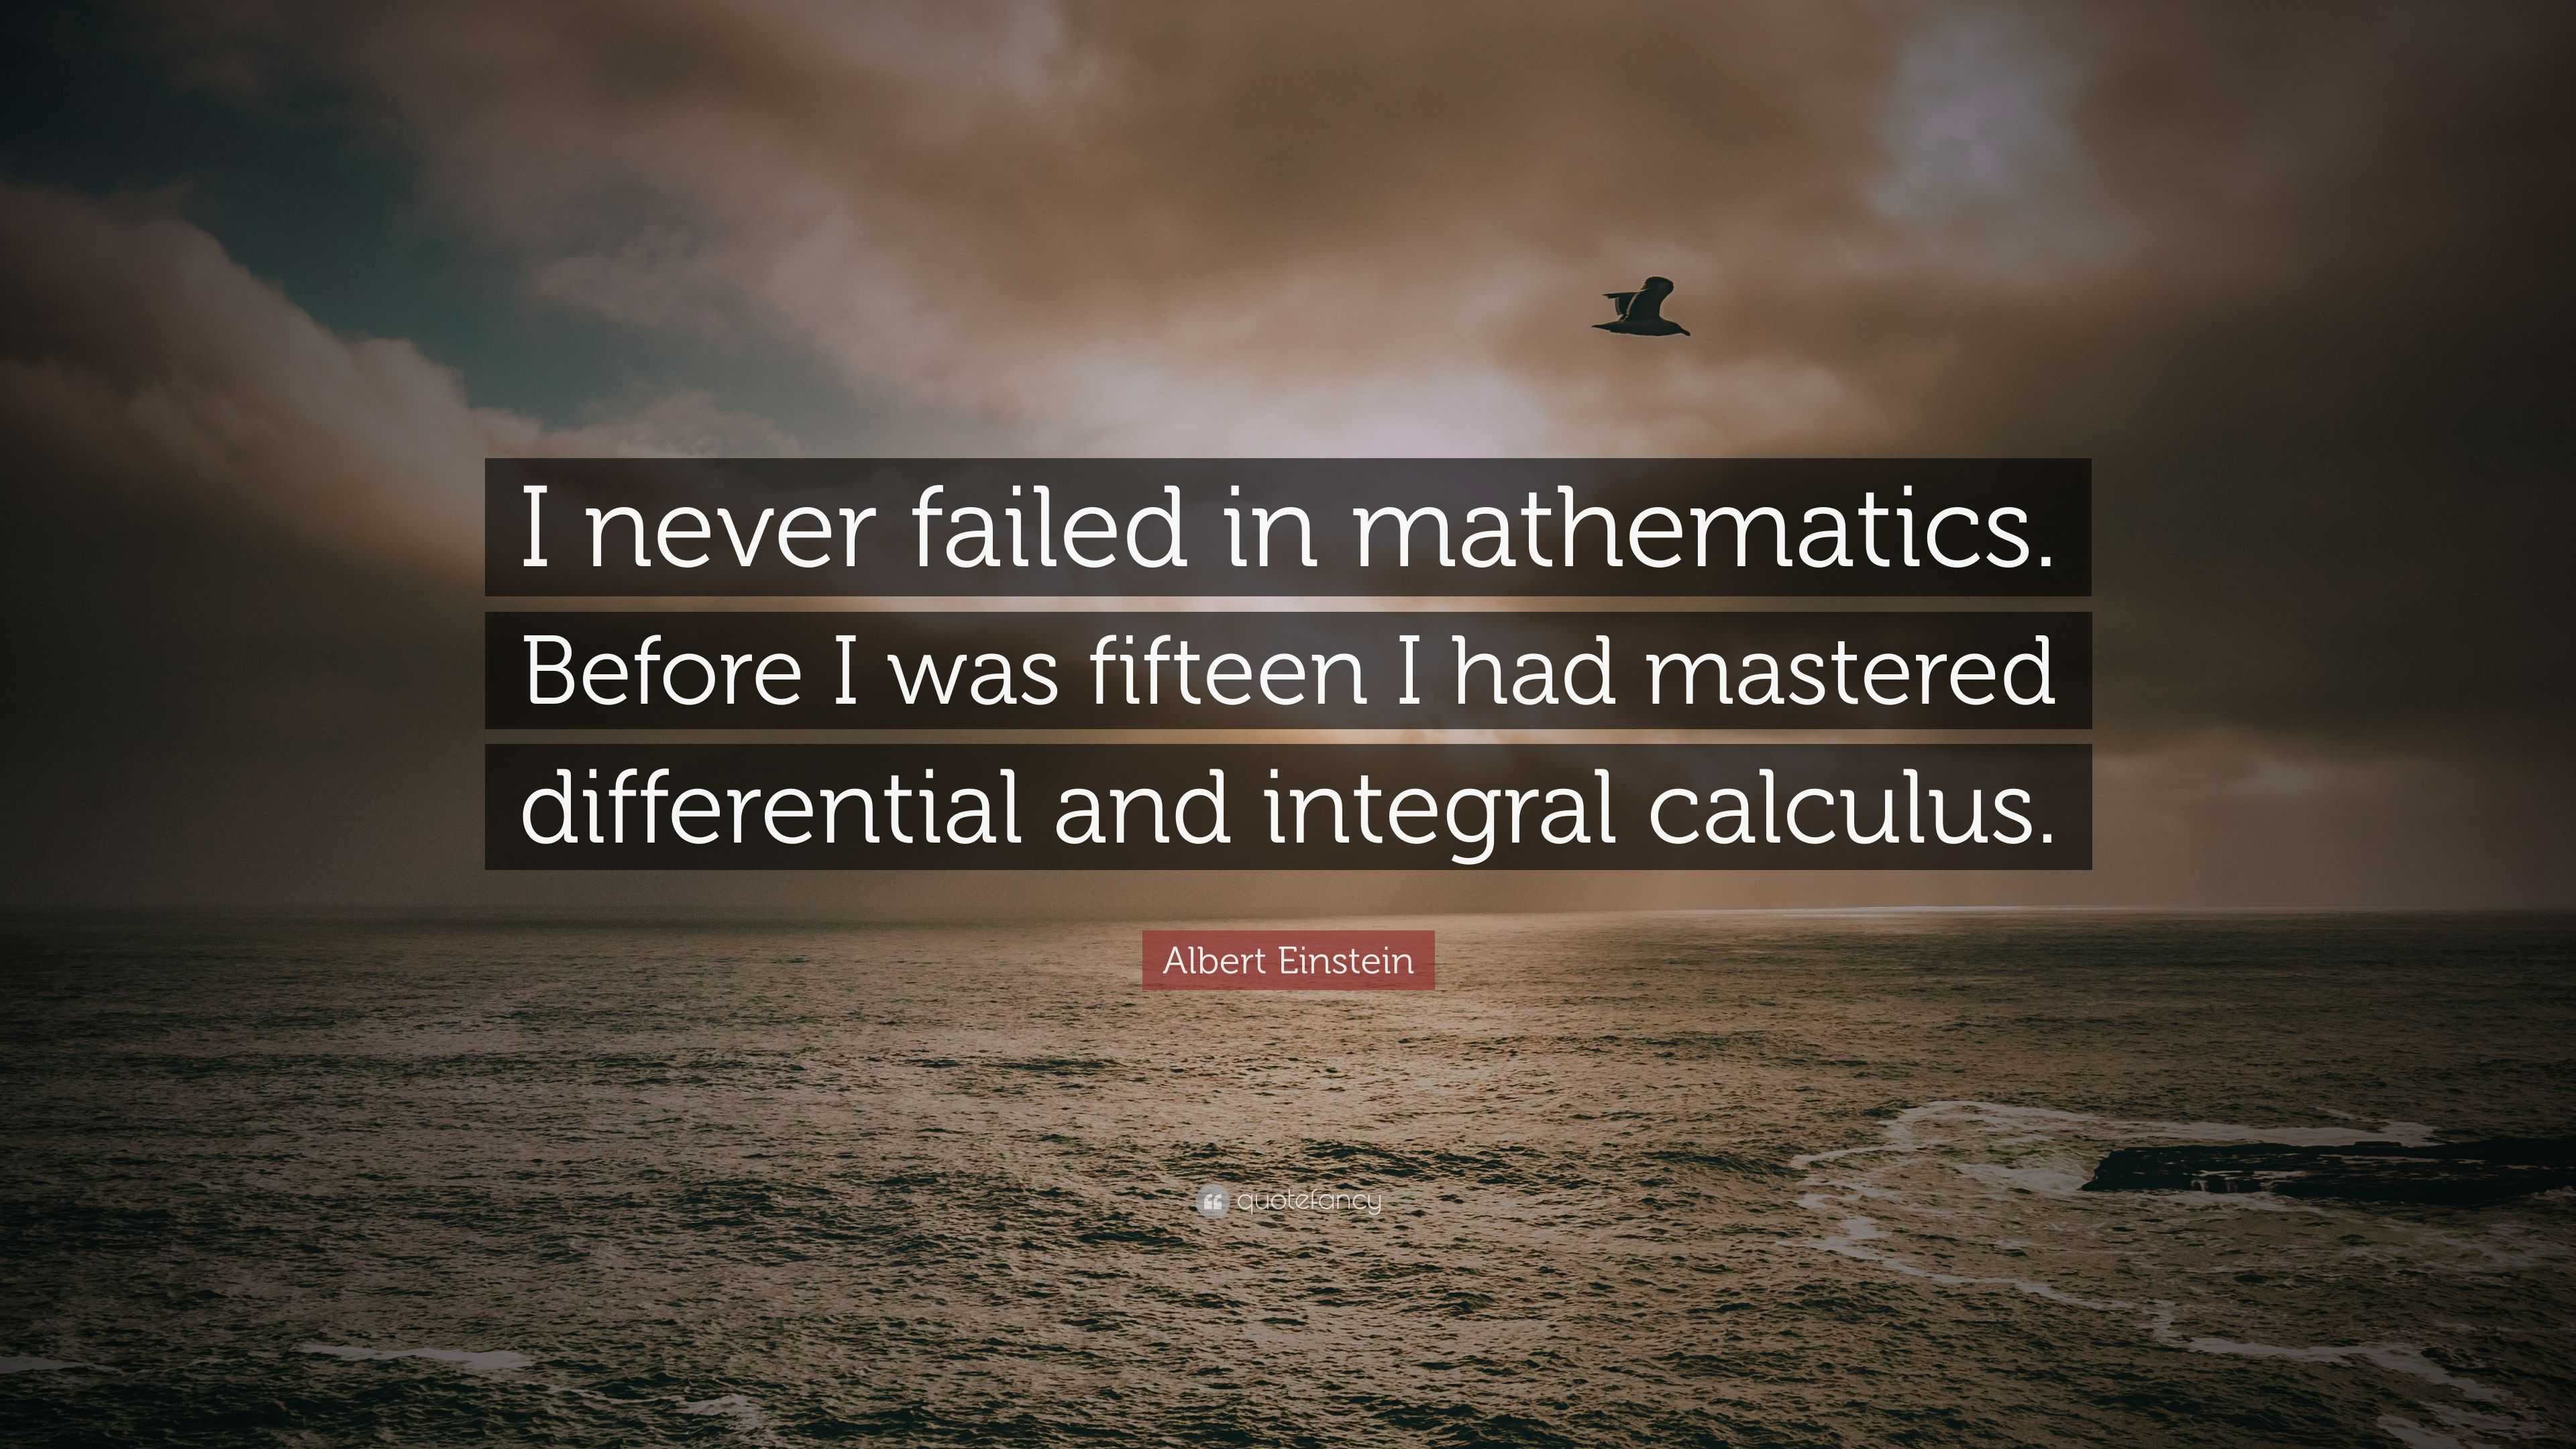 Albert Einstein Quote: “I never failed in mathematics. Before I was